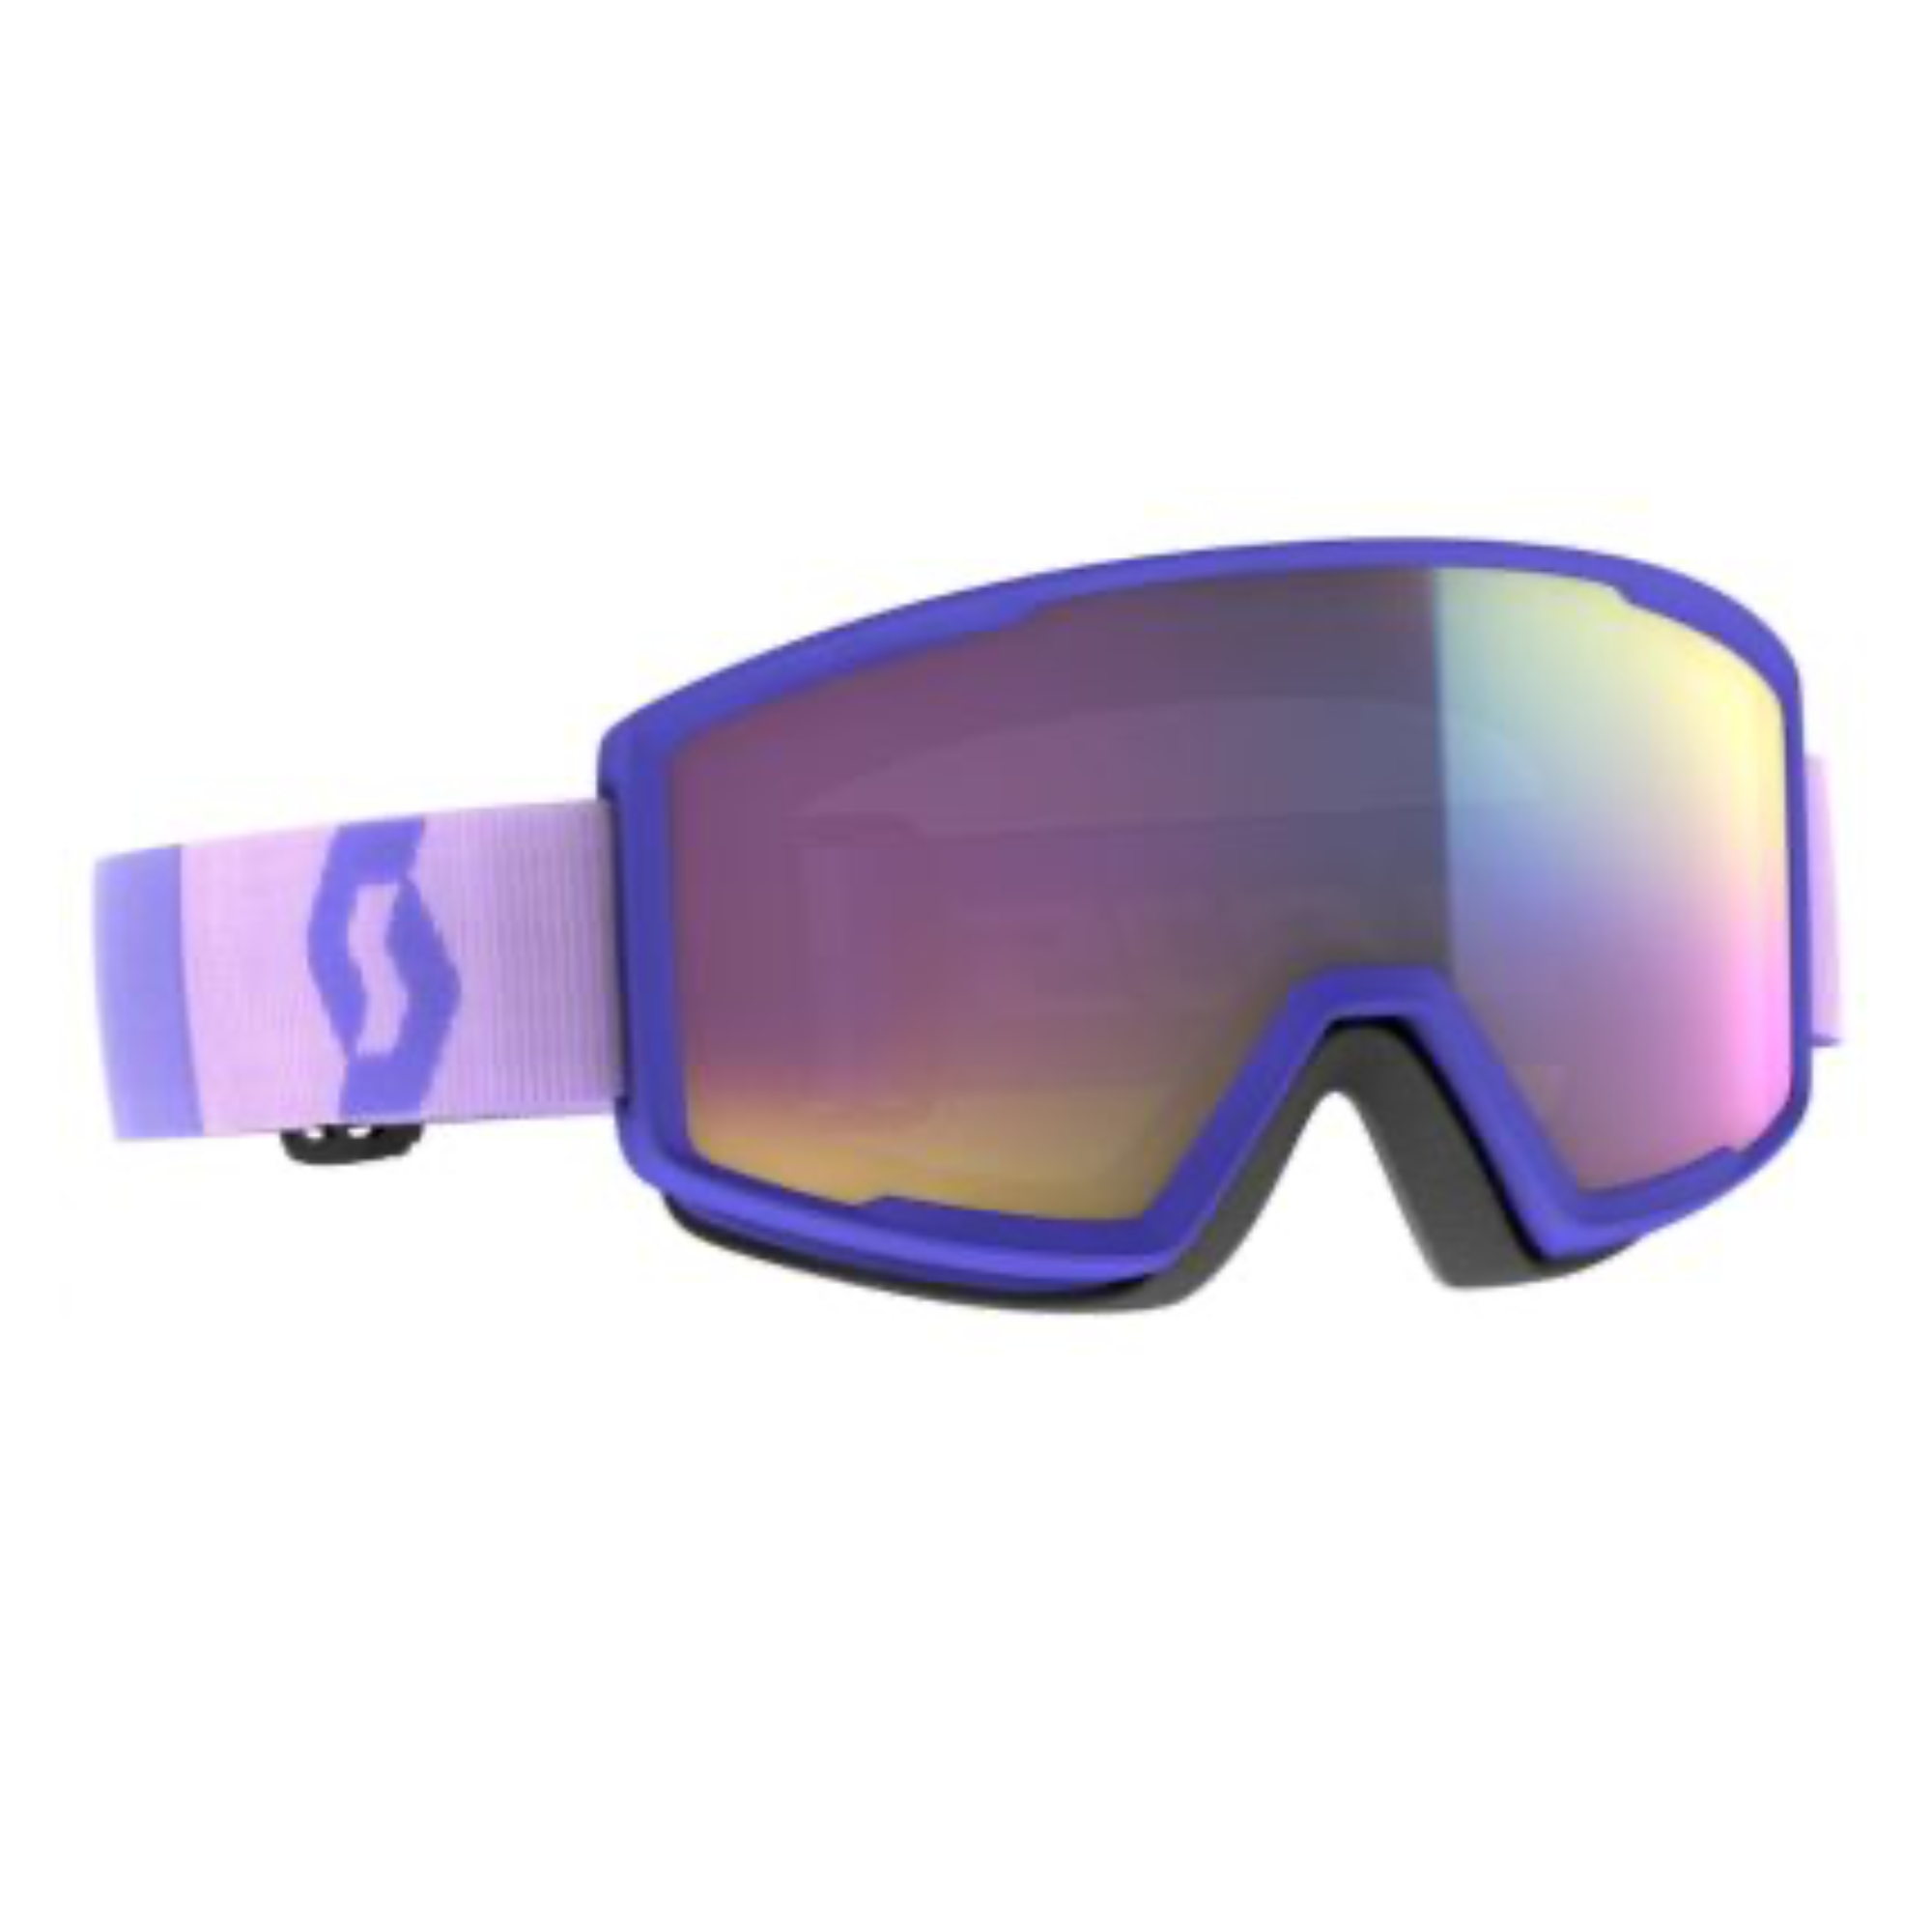 Scott Factor Pro - Lavender Purple / Enhancer Teal Chrome